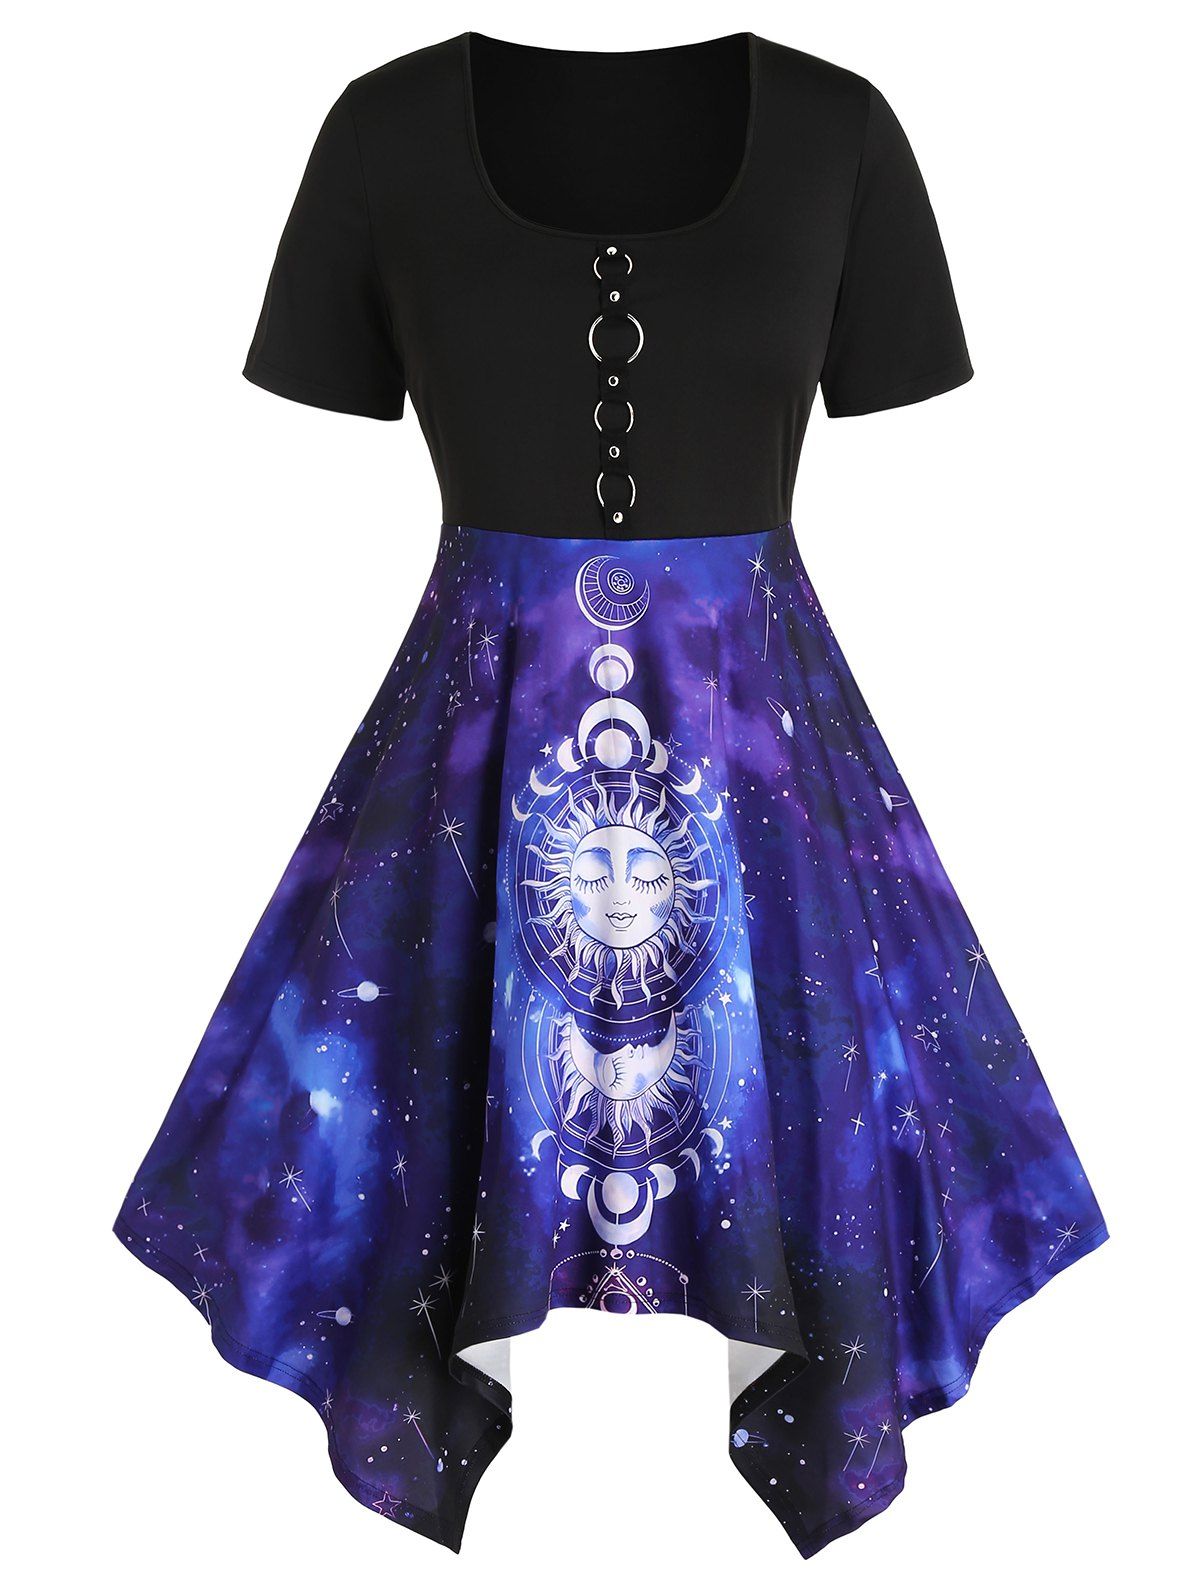 Plus Size & Curve Dress Celestial Sun And Moon Galaxy Print Dress O Ring Handkerchief Asymmetric Dress - BLACK 3X